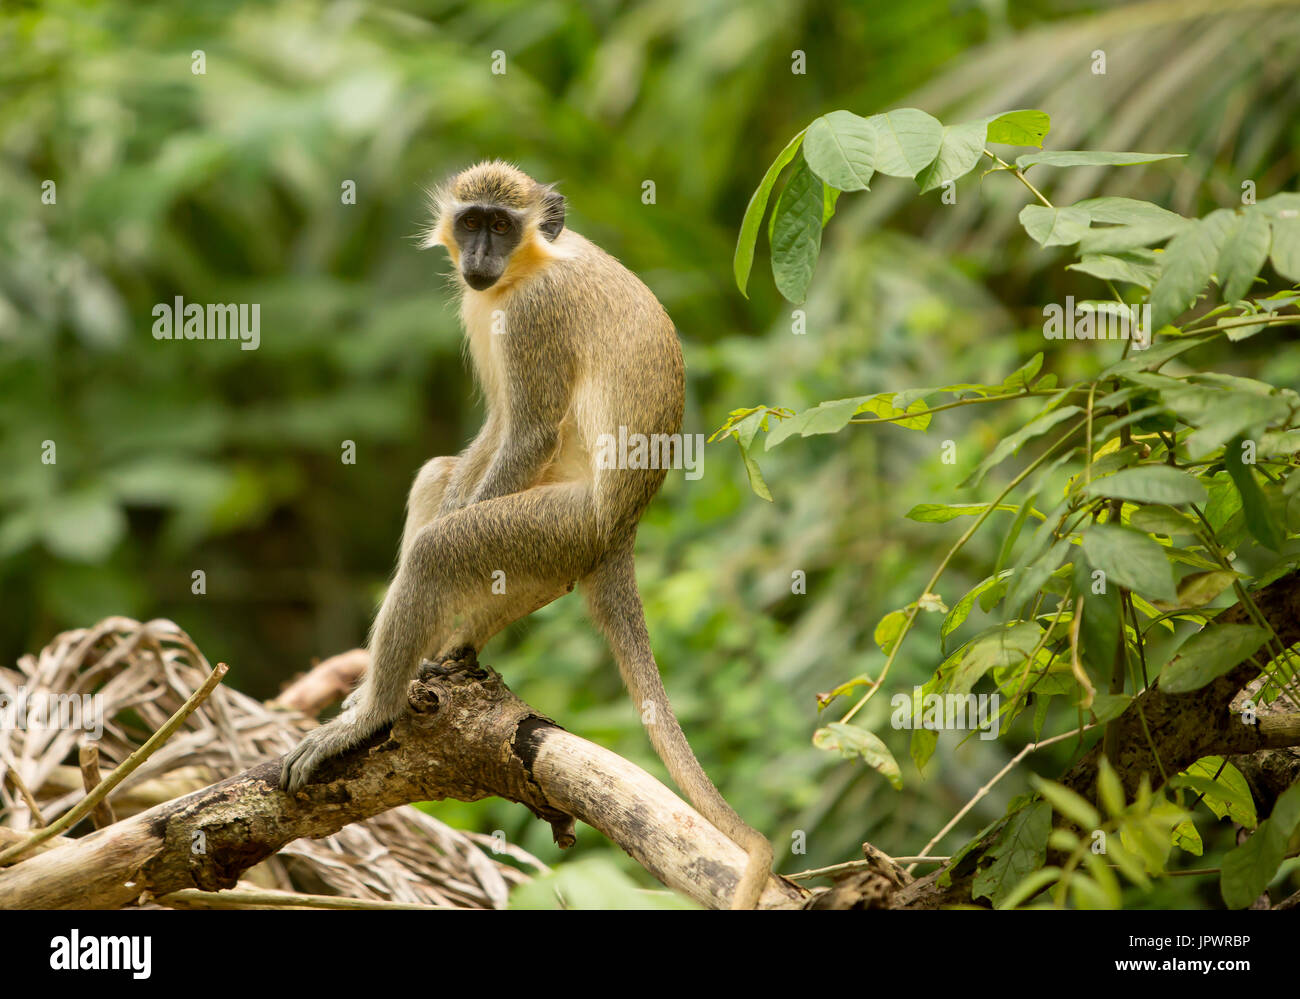 Monos verdes fotografías e imágenes de alta resolución - Alamy